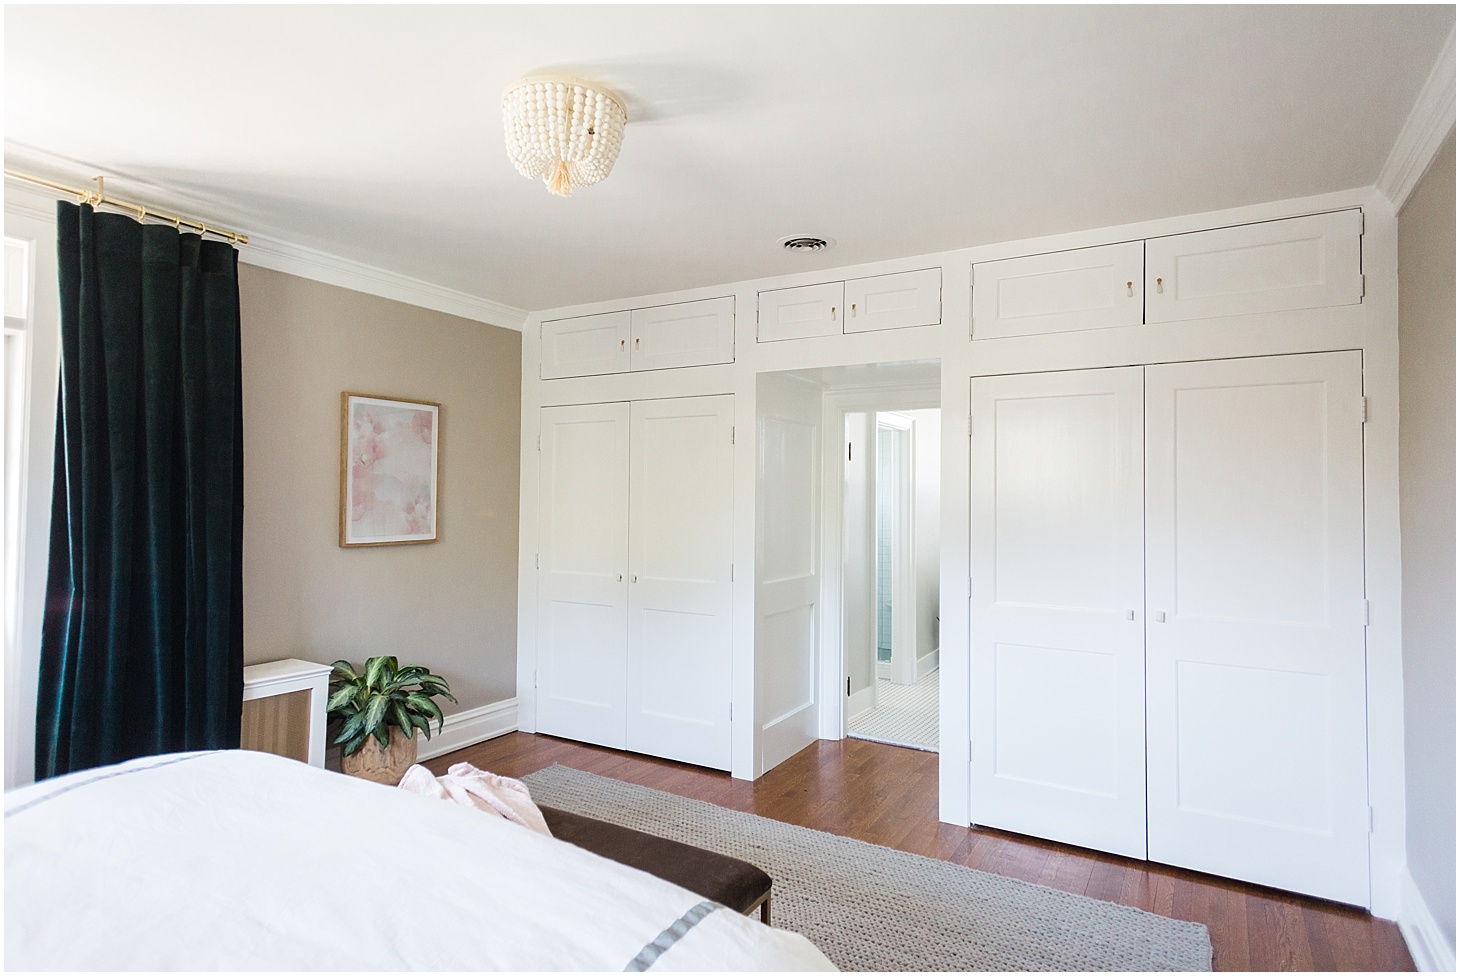 Classic Bedroom Inspiration | Brick Colonial Revival Home Tour in Richmond, VA | Sarah Bradshaw Photography